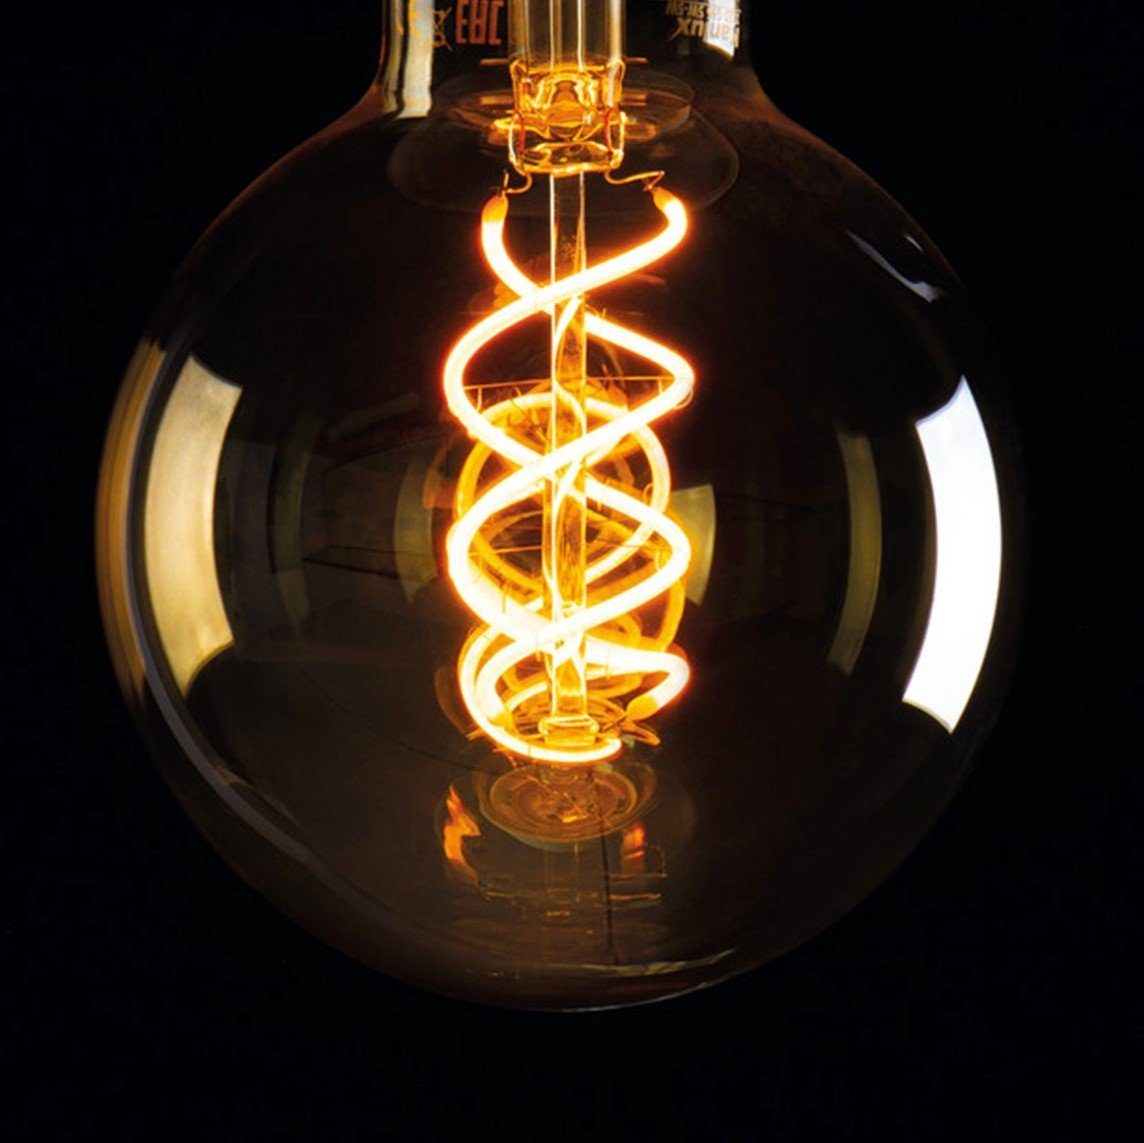 SSC-LUXon LED-Hängeleuchte E27 mit PIA Beton Filament, Design LED Warmweiß Globe Pendelleuchte Spiral